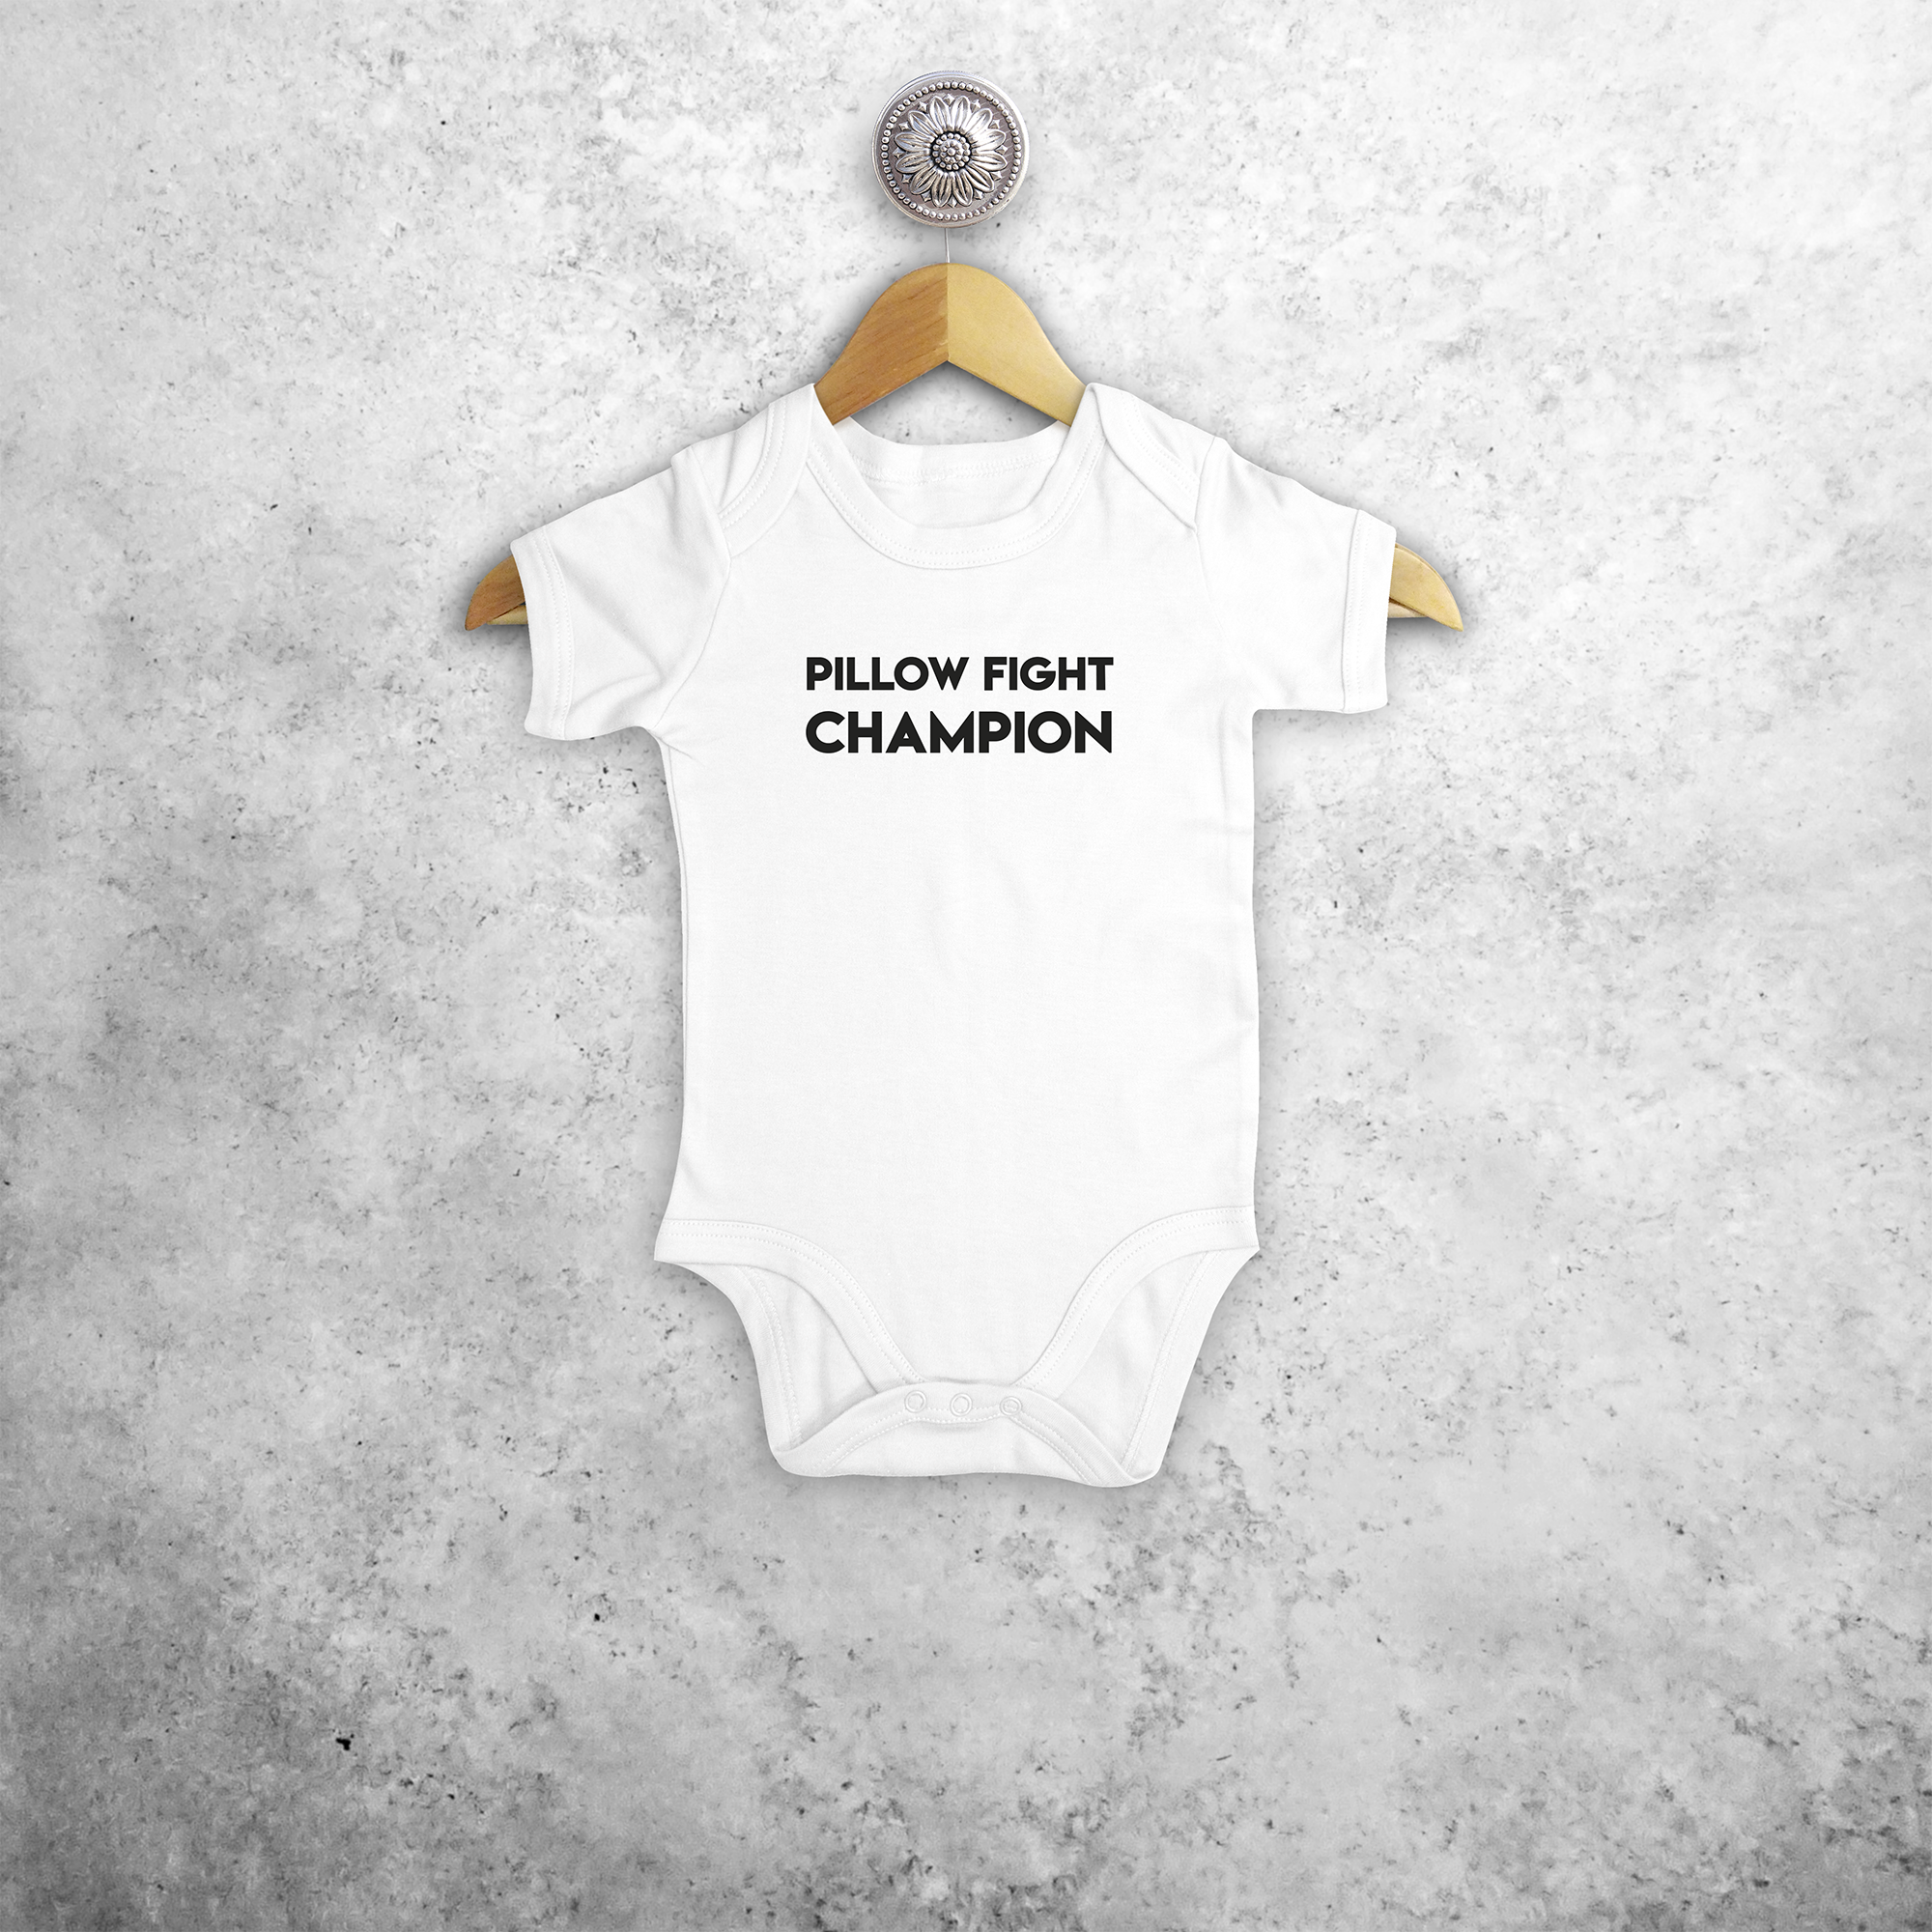 'Pillow fight champion' baby shortsleeve bodysuit